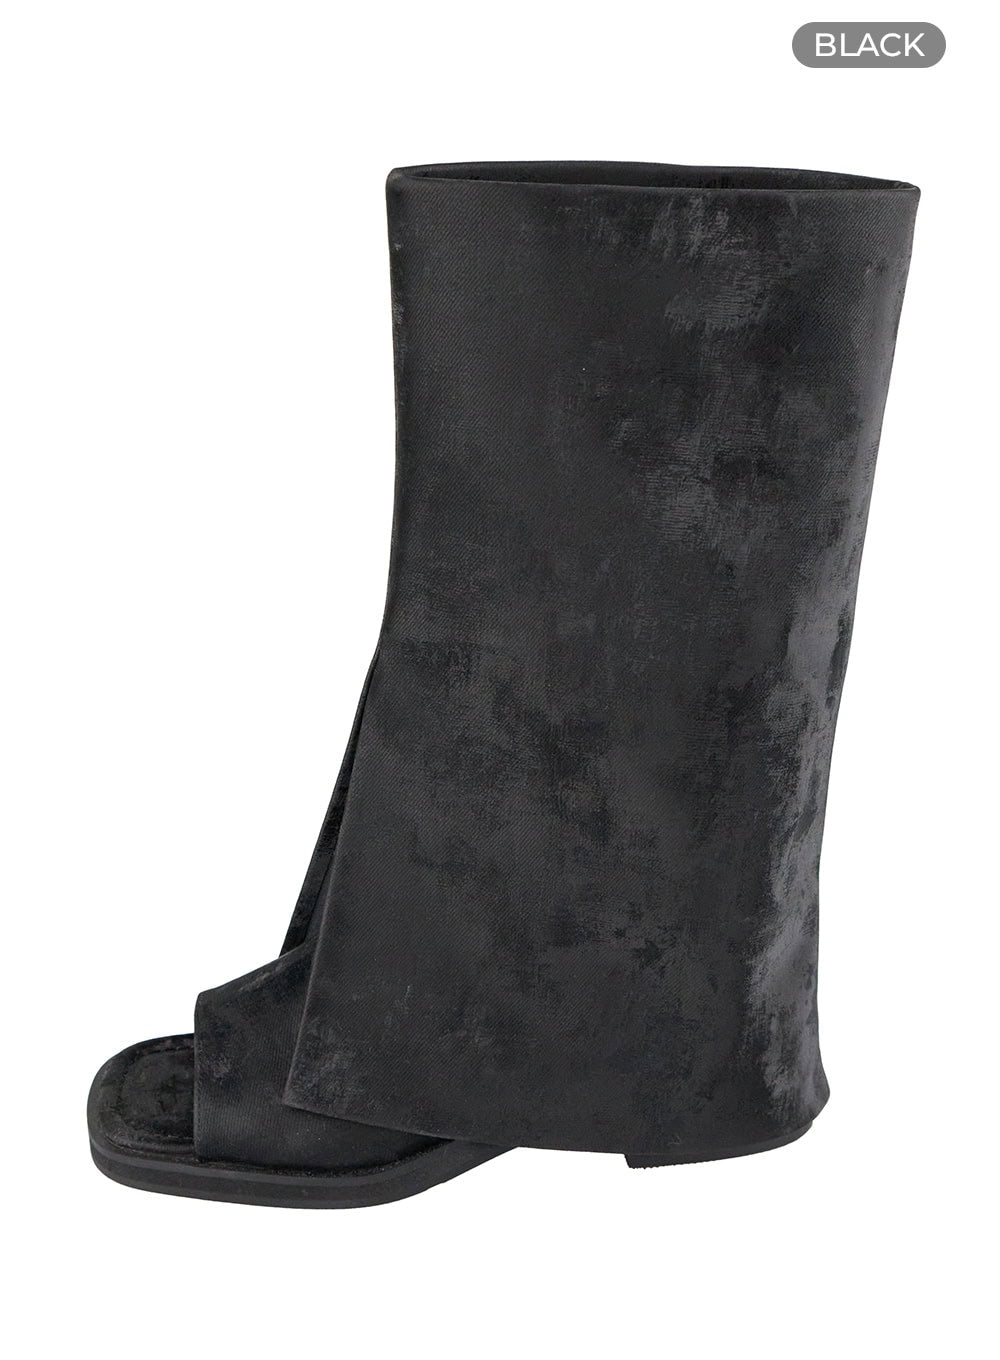 velvet-open-toe-knee-high-boots-cu425